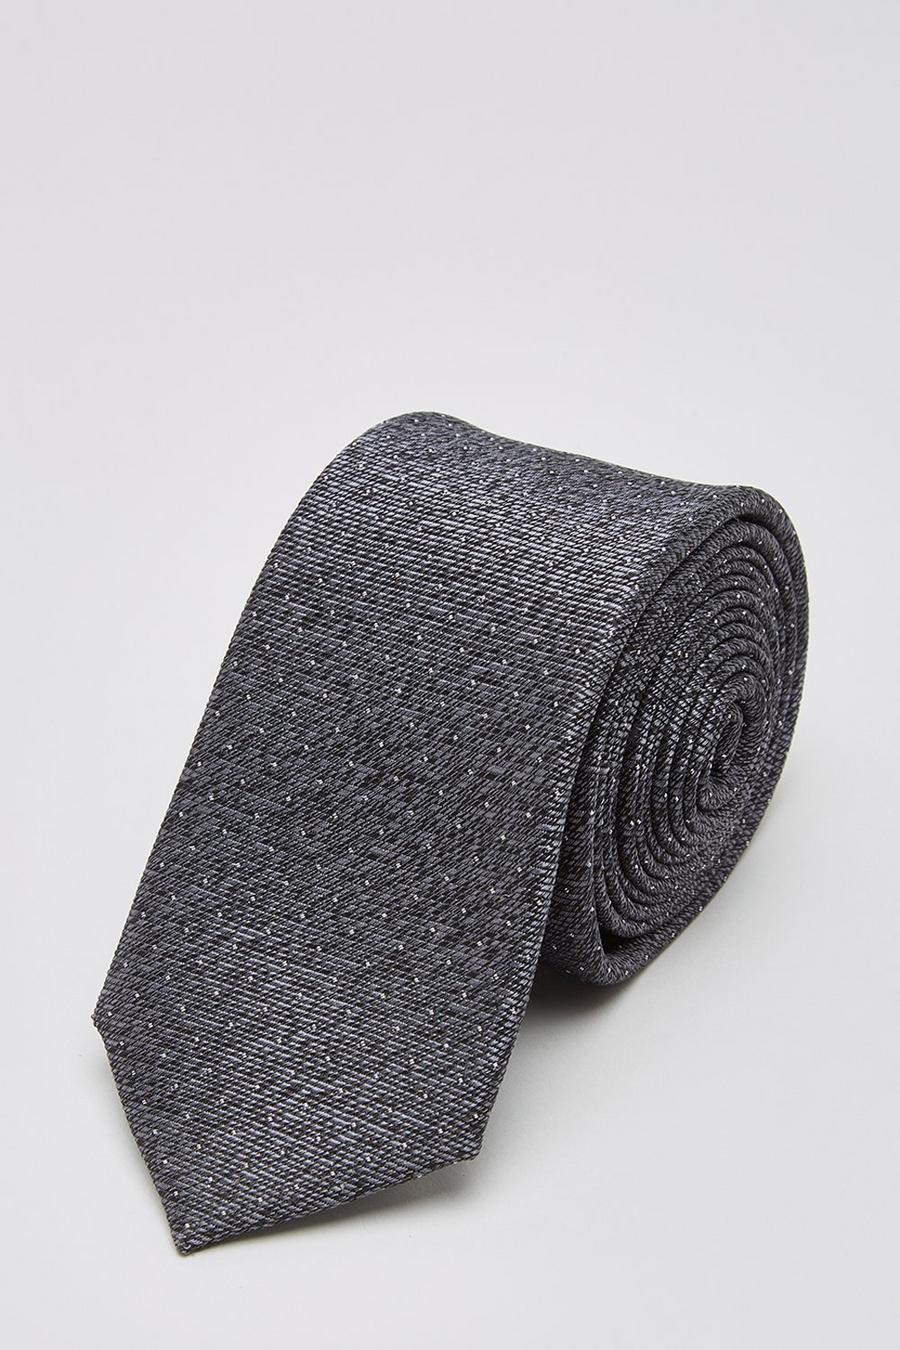 Ben Sherman Textured Micro Spot Woven Tie